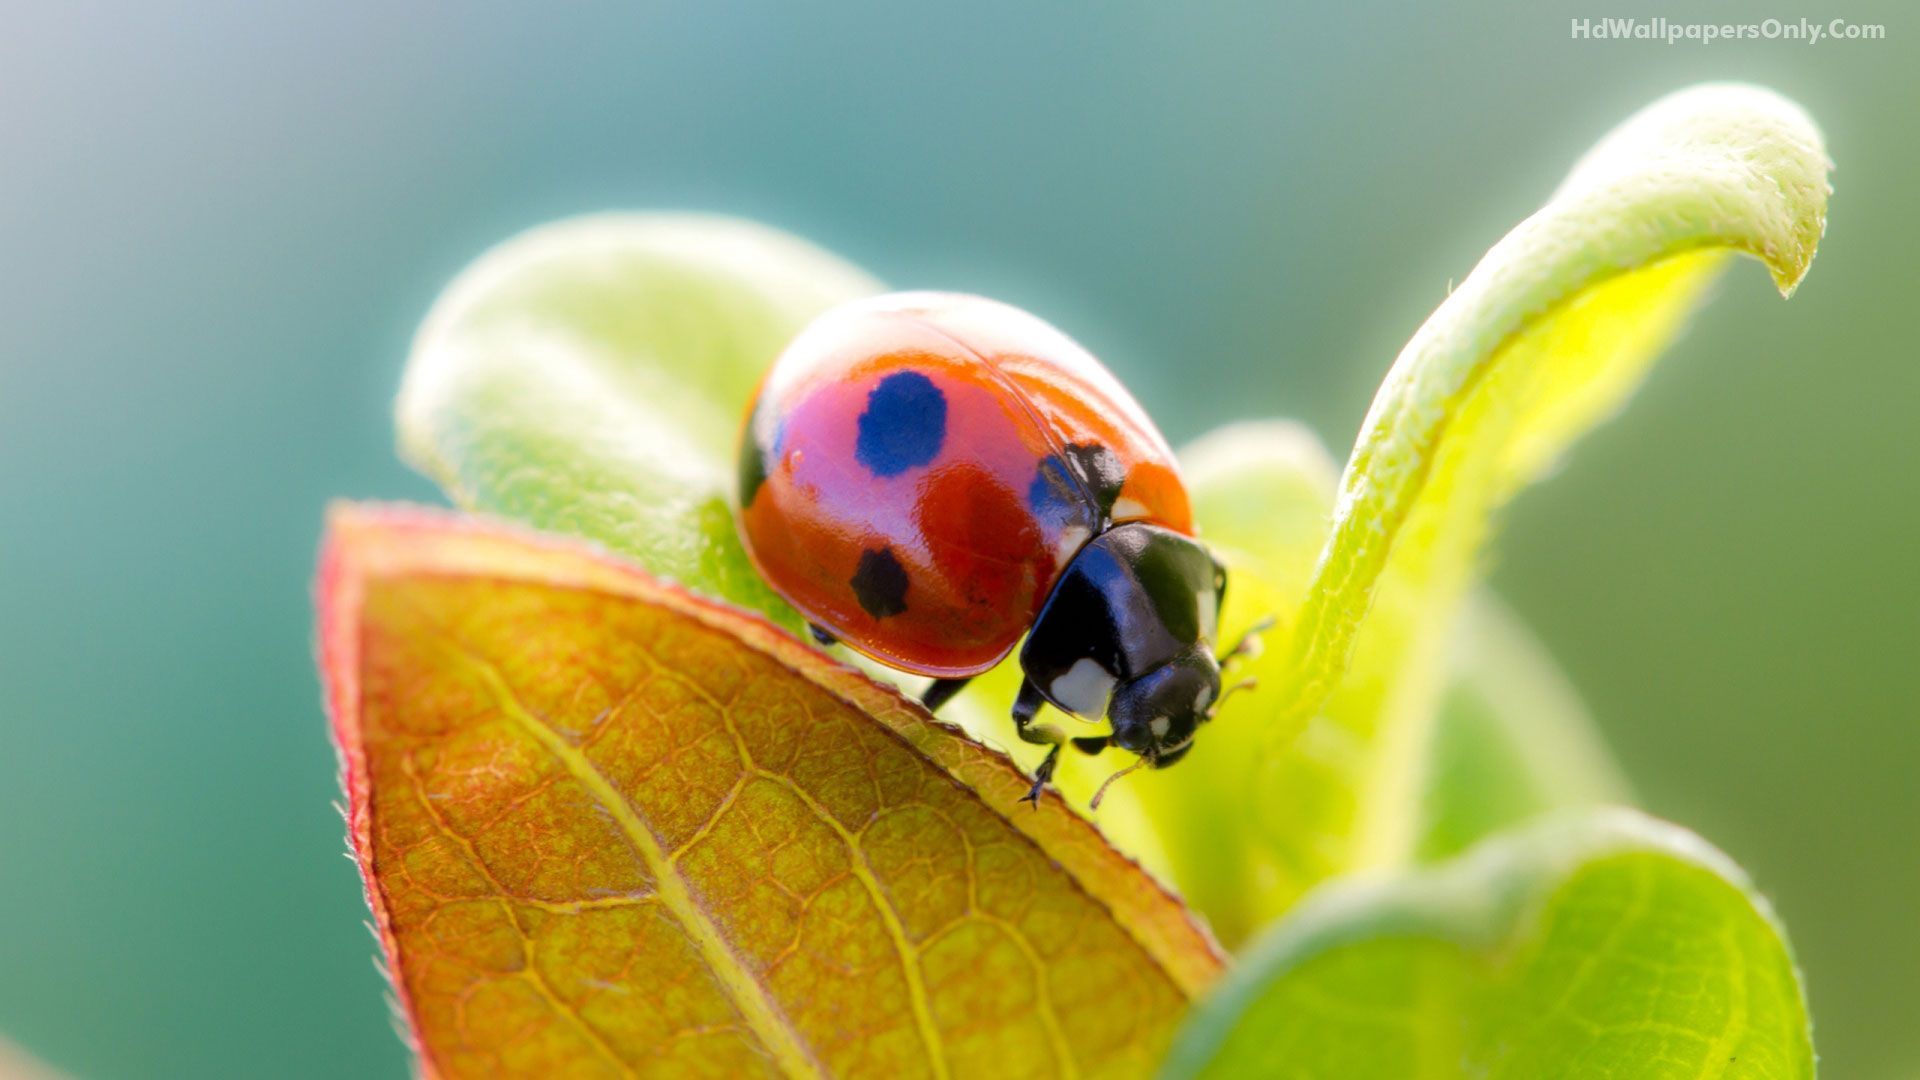 Lady Bug. Ladybug wallpaper, Animal photography, Ladybug